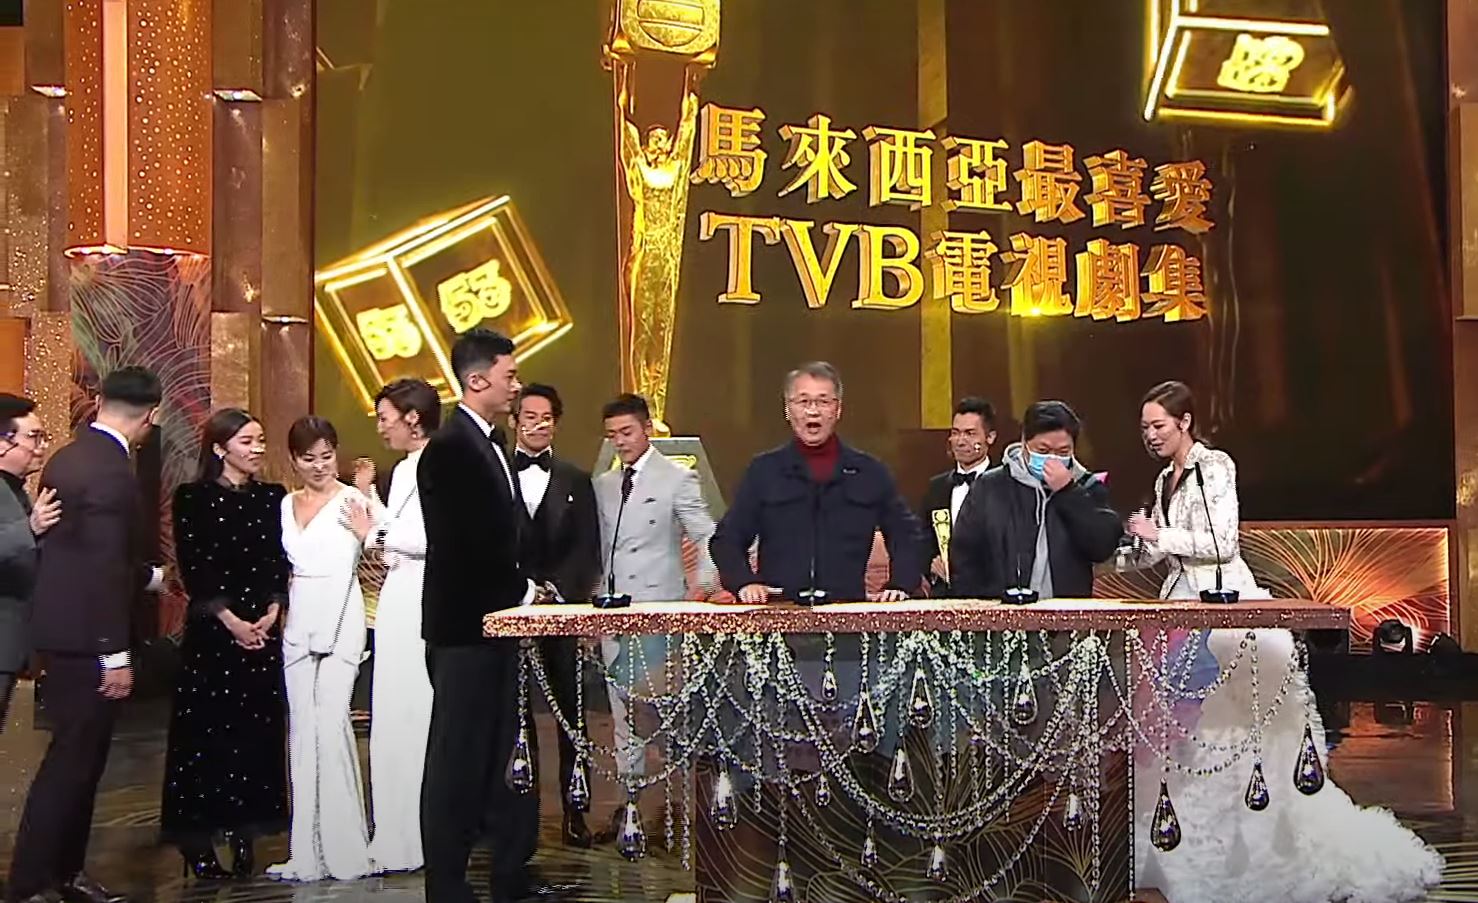 TVB Anniversary Awards 2020 (萬千星輝頒獎典禮2020) Review